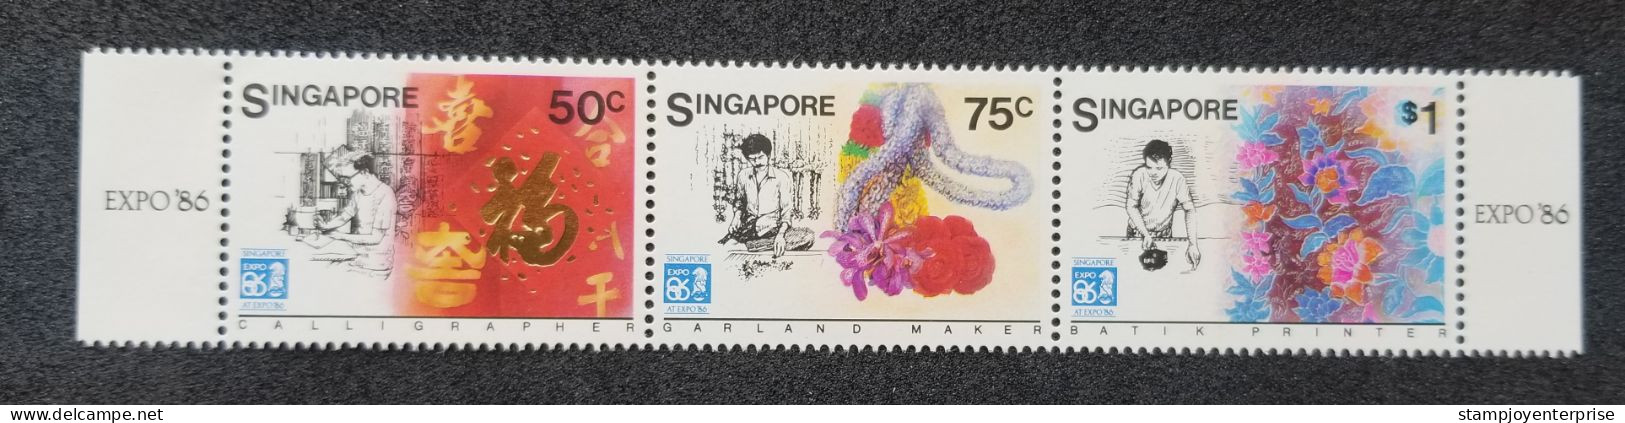 Singapore Expo '86 1986 Art Orchid Flower Calligraphy Batik Craft Orchids (stamp) MNH - Singapur (1959-...)